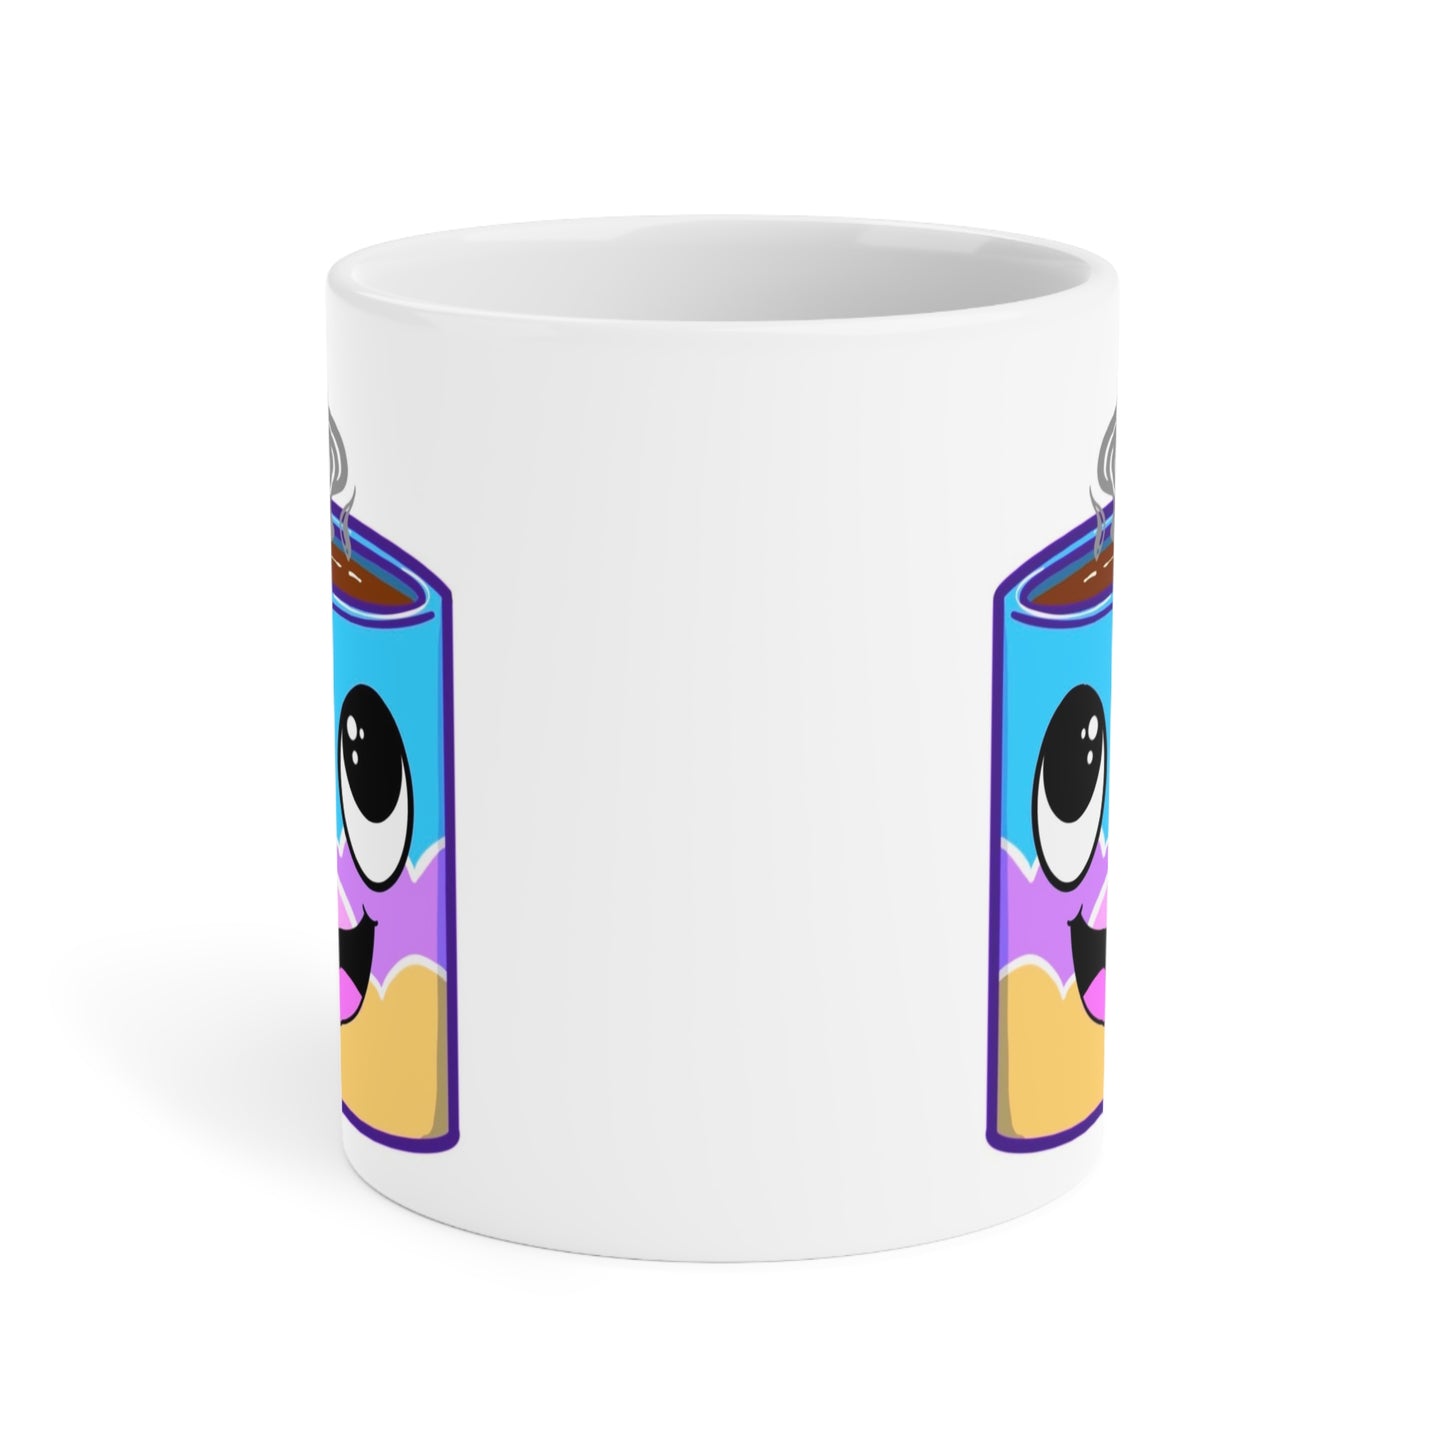 "Mug Mug" - Ceramic Mugs (11oz/15oz/20oz)